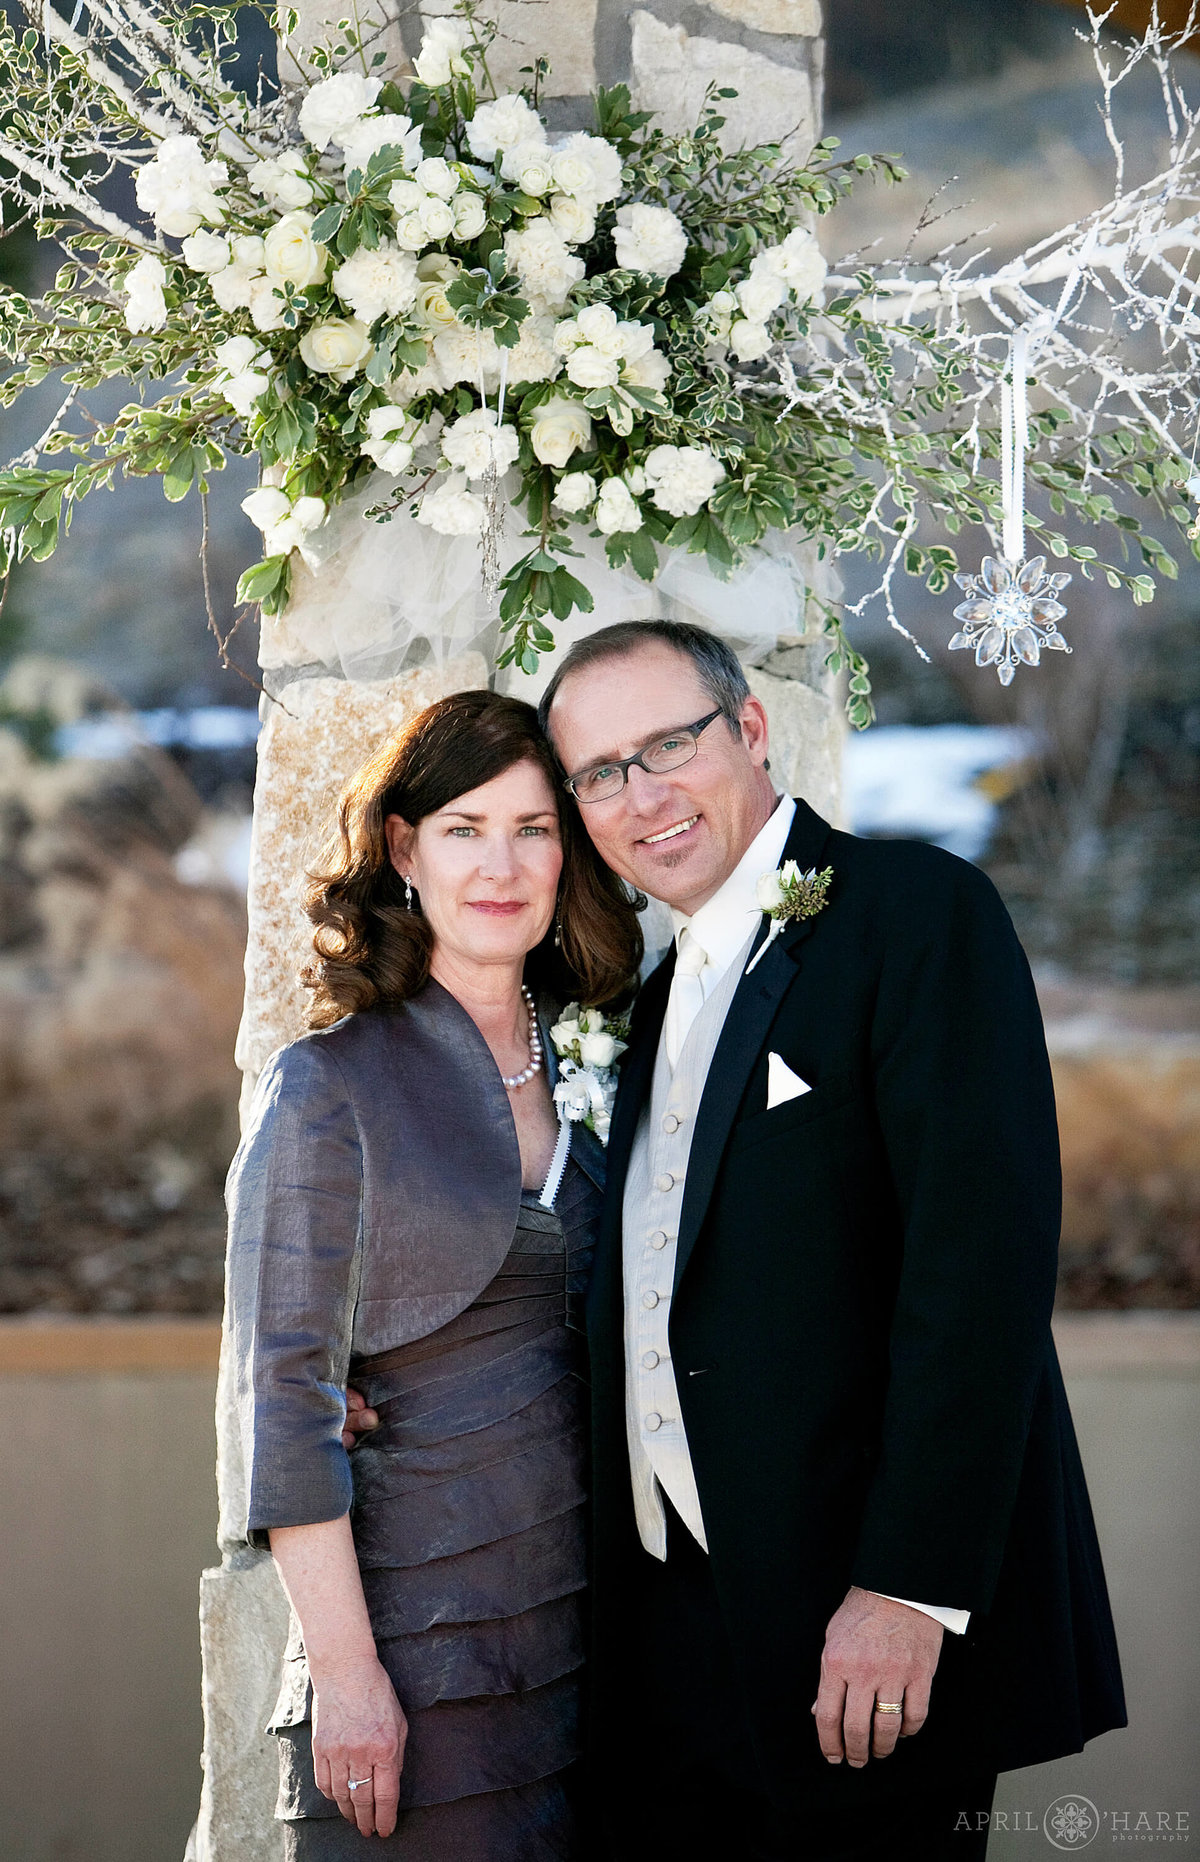 Parent Photos from a Denver Wedding at Cielo in Castle Pines Colorado